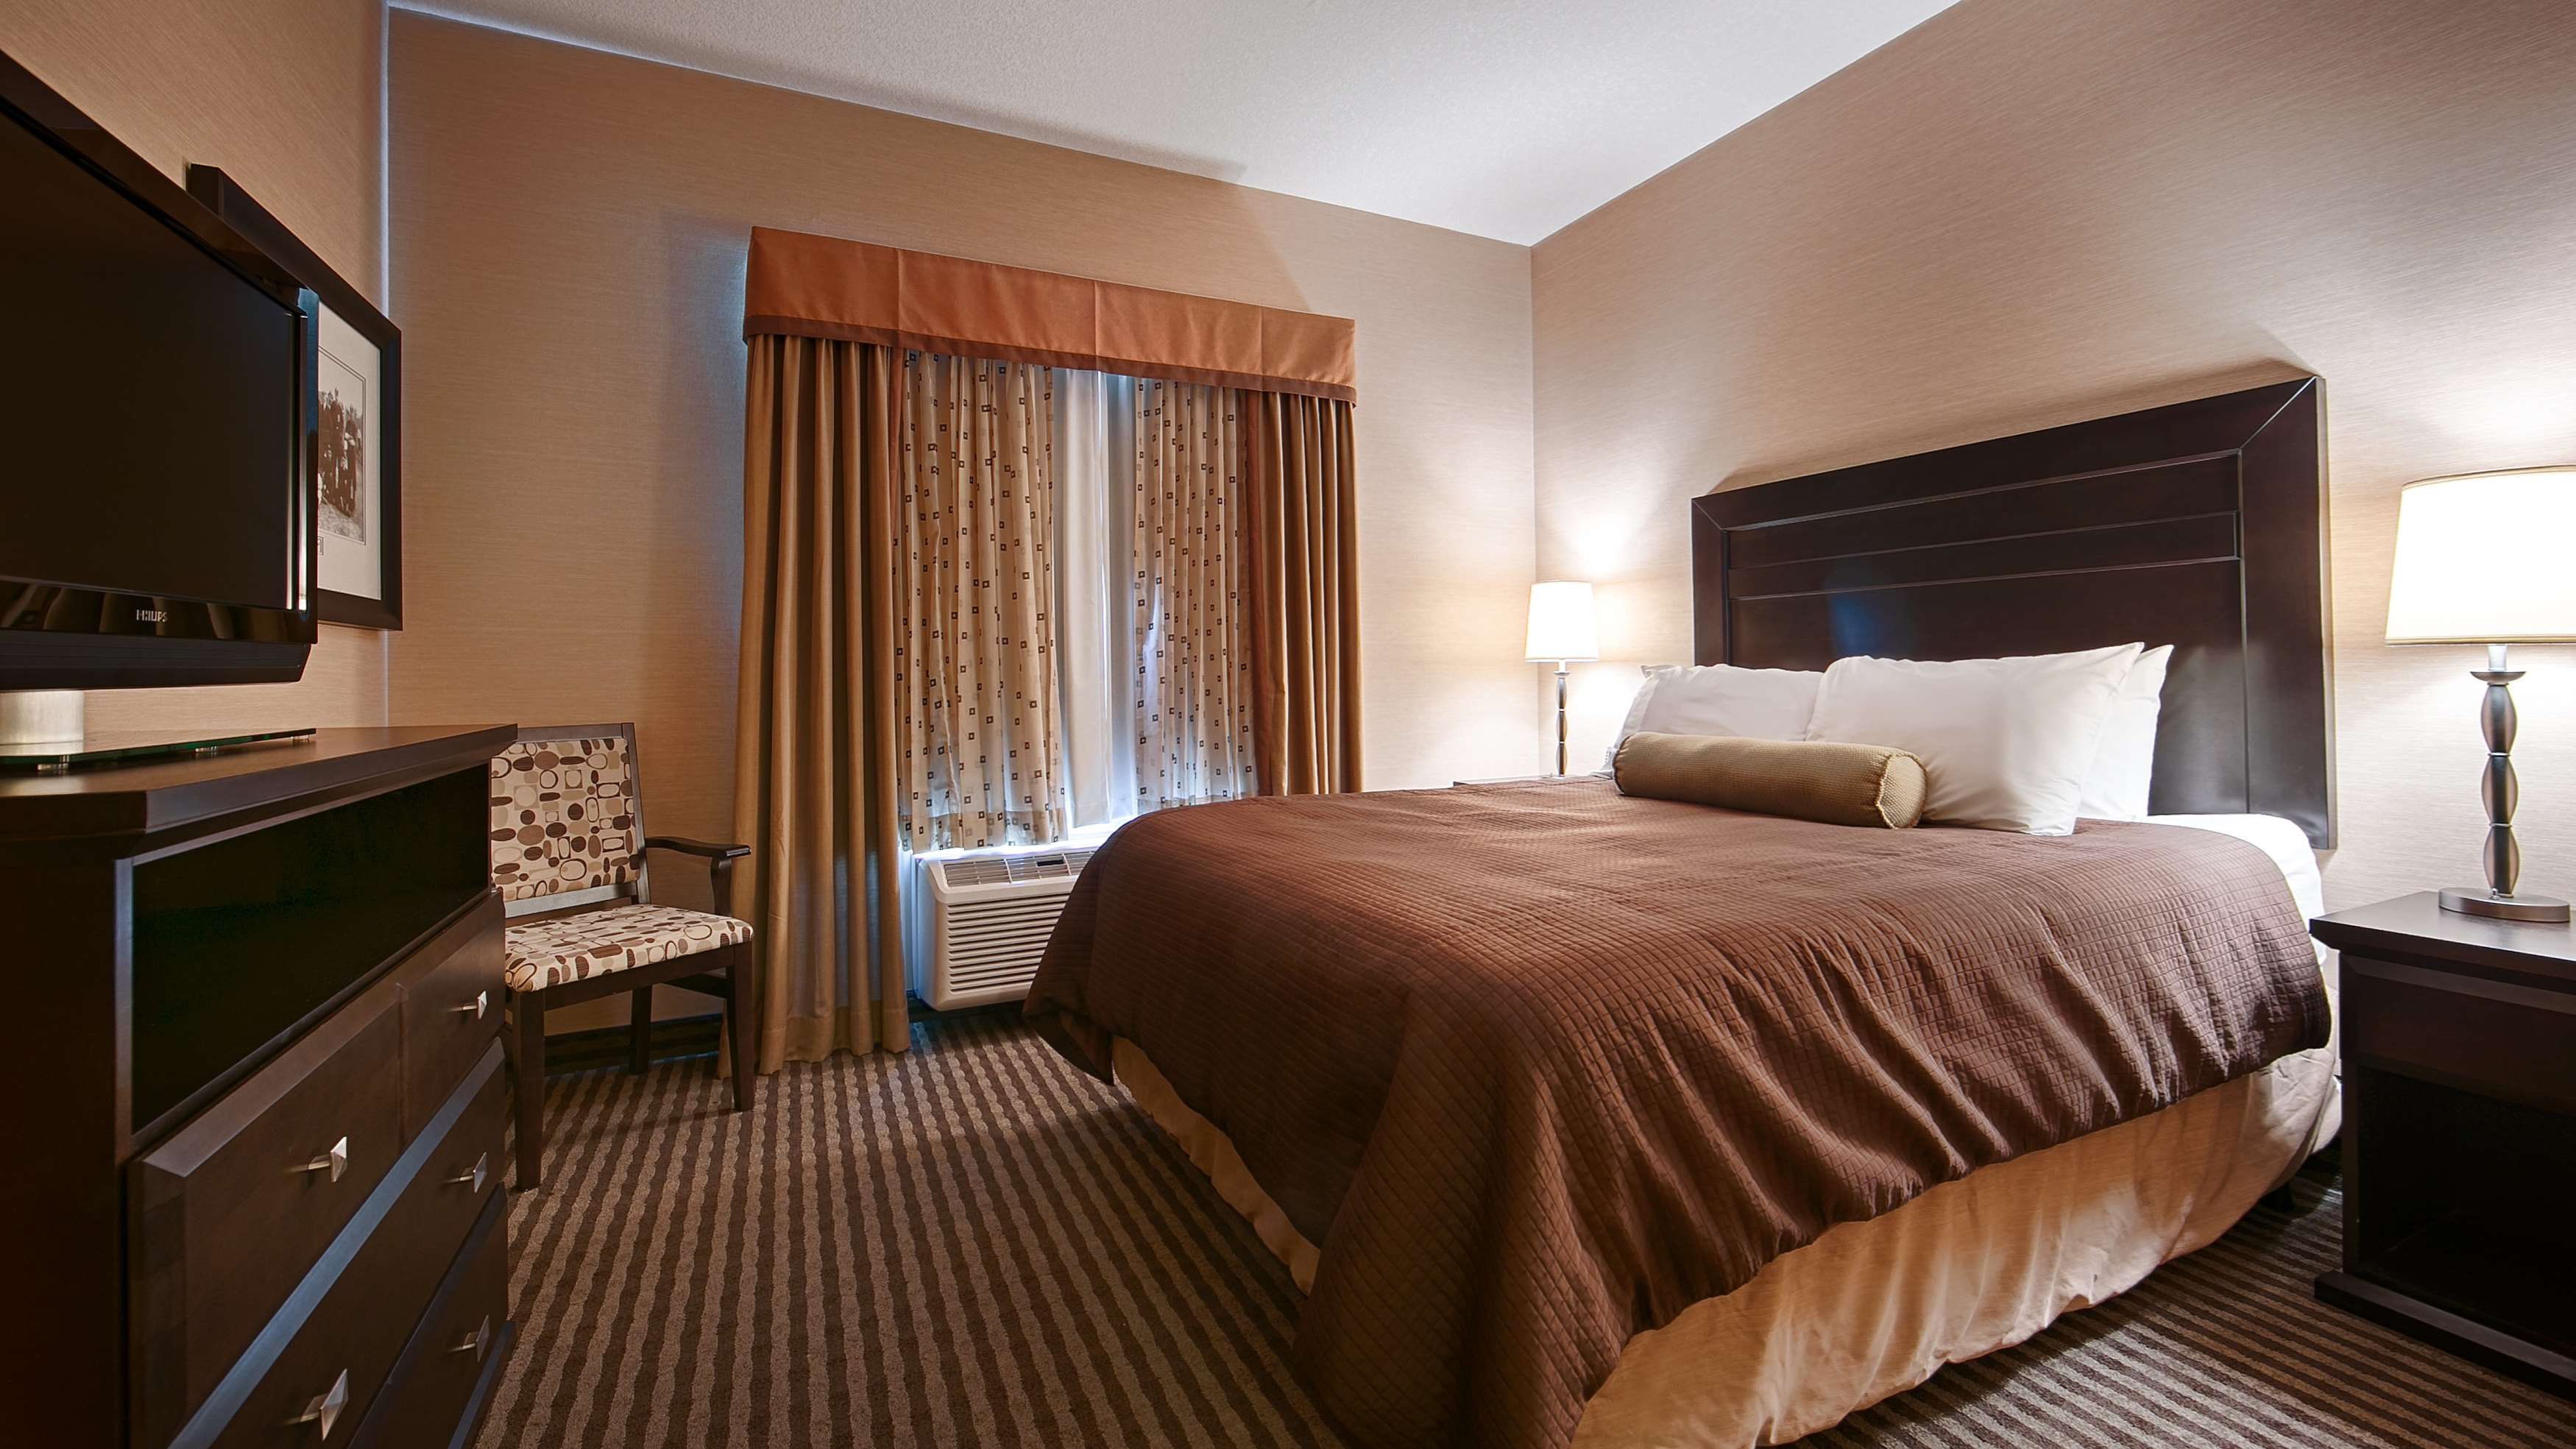 King Bed Guest Room Best Western Sunrise Inn & Suites Stony Plain (780)968-1716